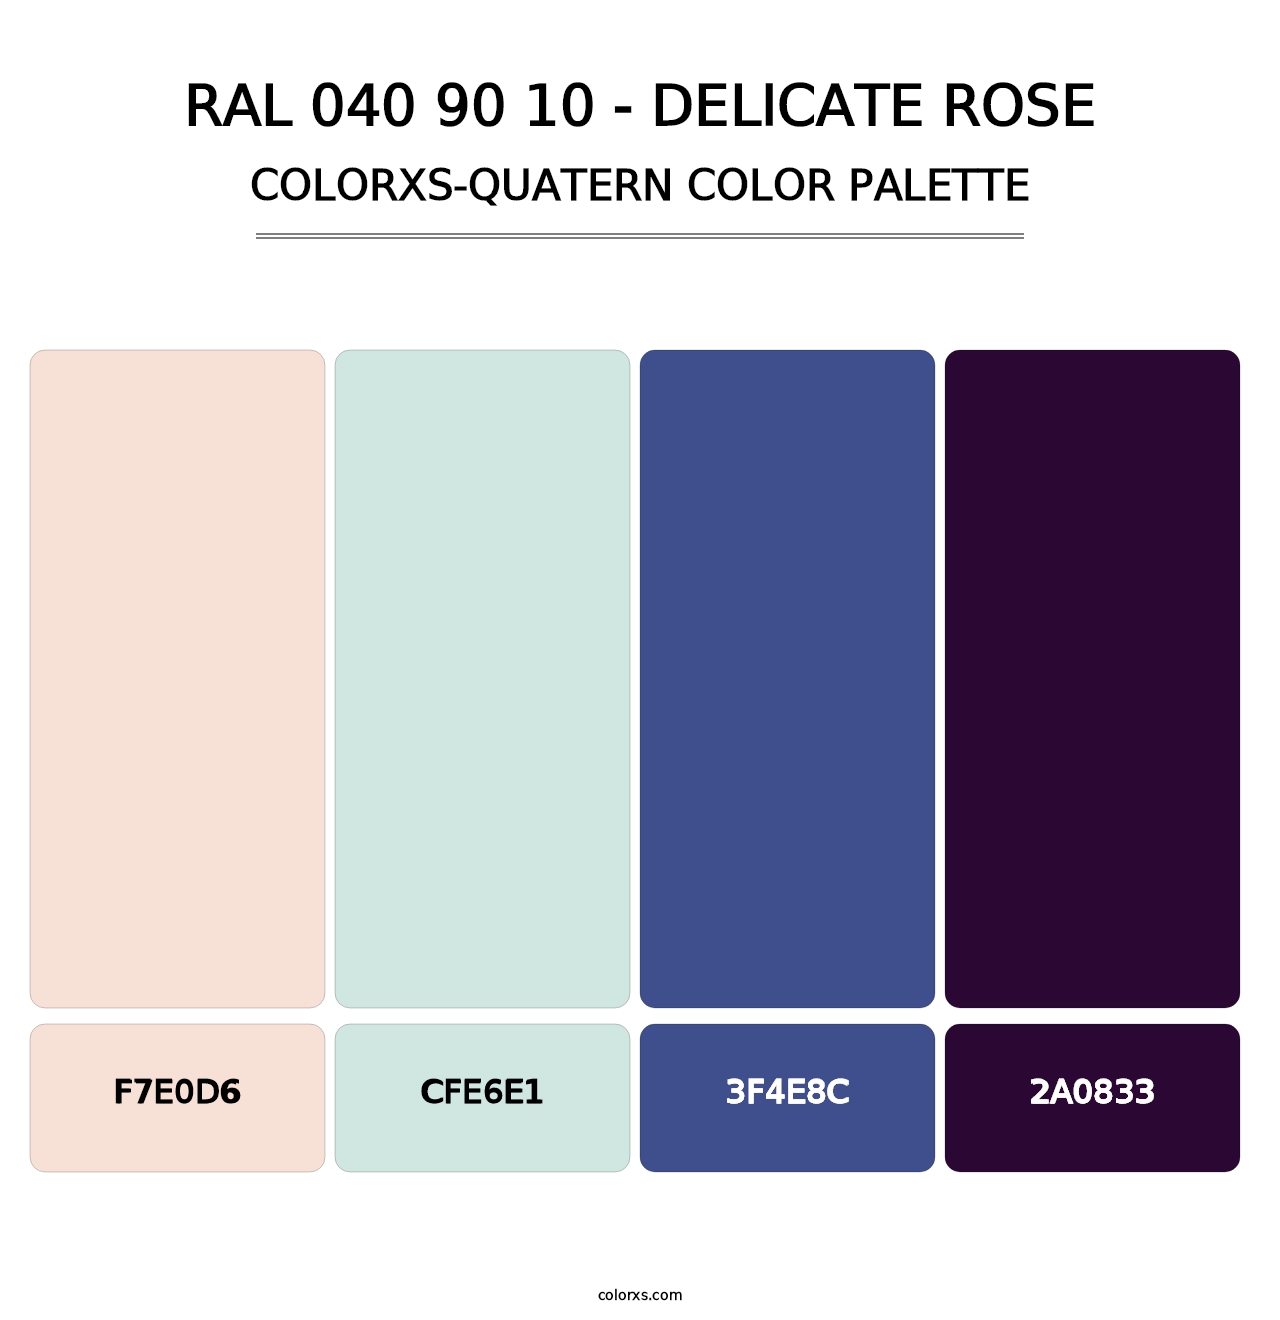 RAL 040 90 10 - Delicate Rose - Colorxs Quatern Palette